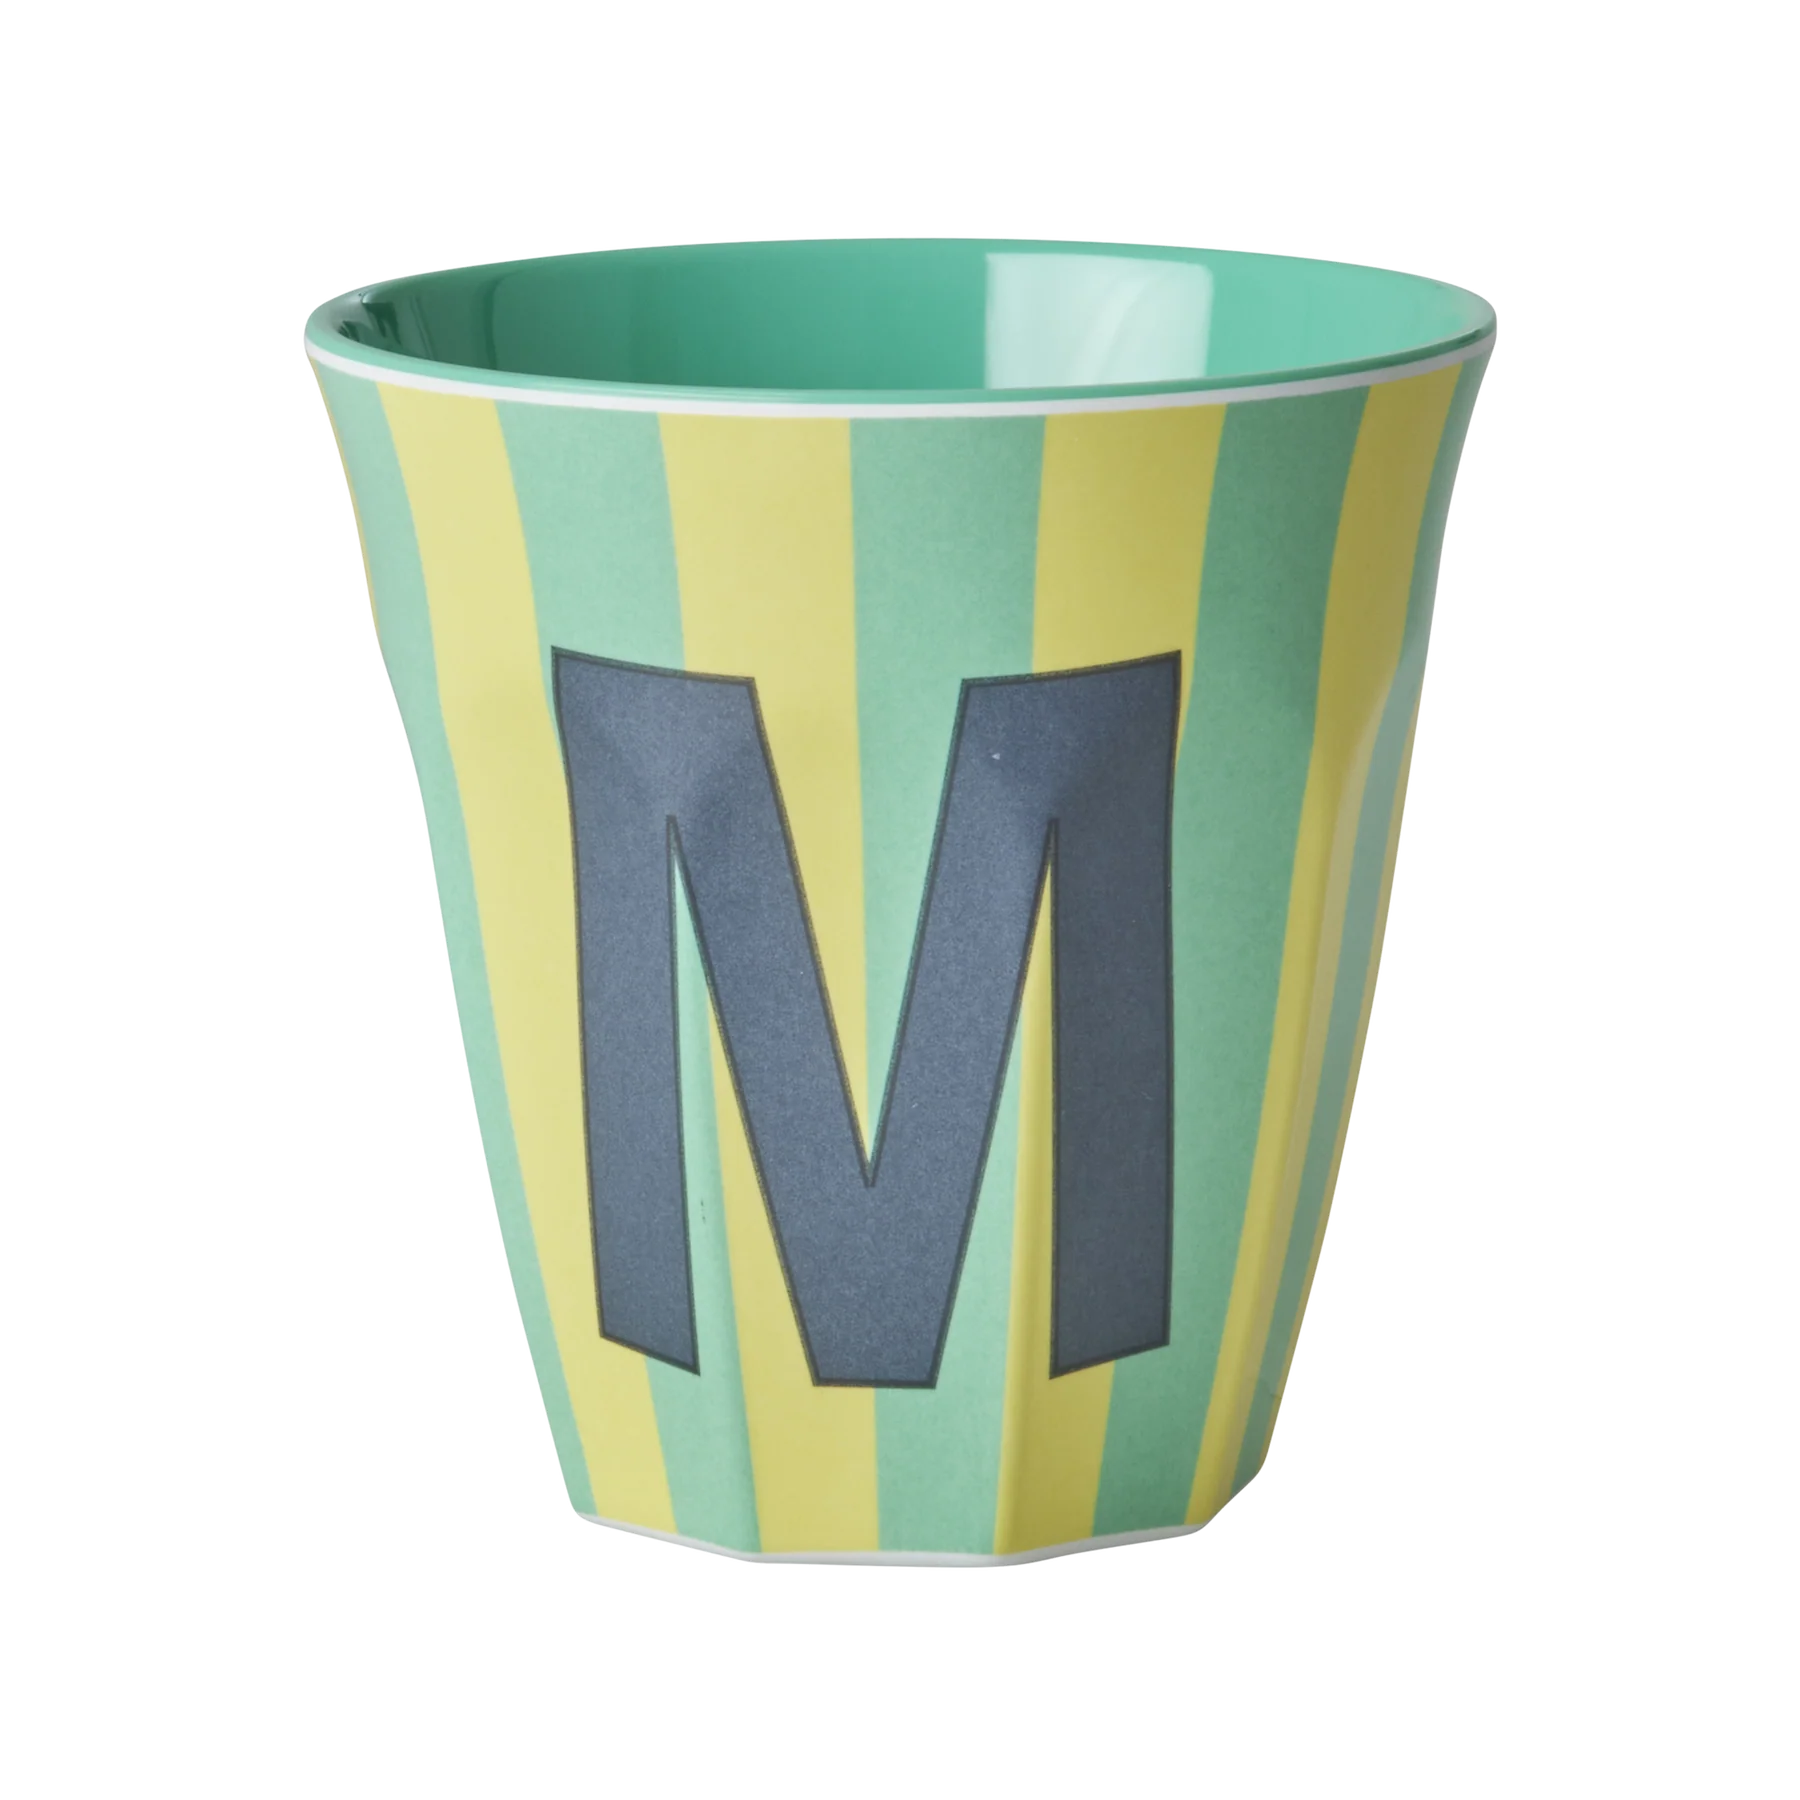 M Blue Stripe Melamine Cup - Rice DK